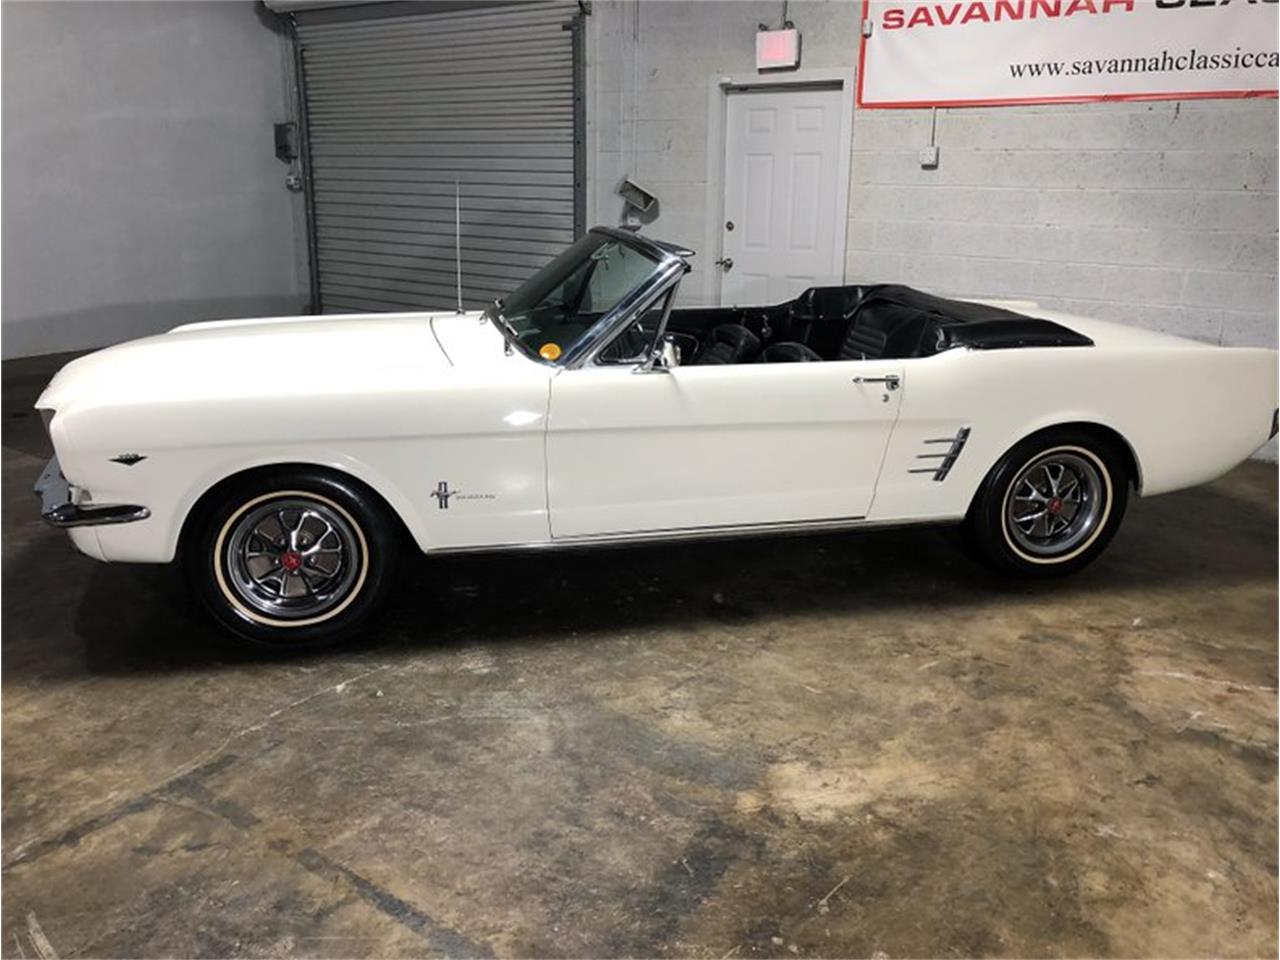 1966 Ford Mustang for sale in Savannah, GA